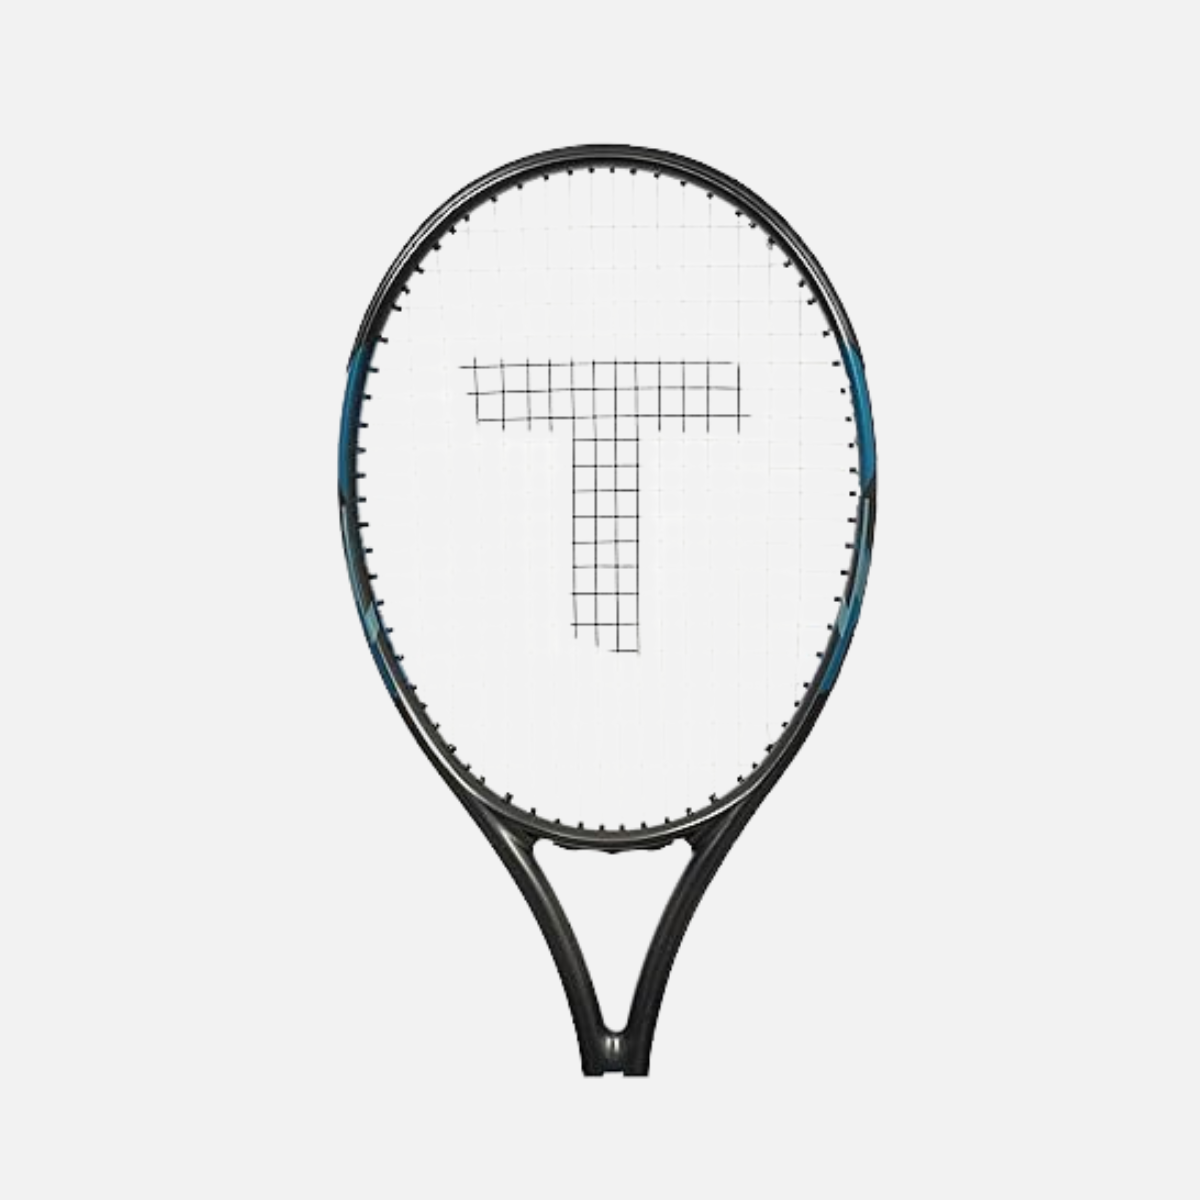 Tanso Tsuyo 44 Full Graphite High Performance Tennis Racquet -Slate Grey/Wine Red